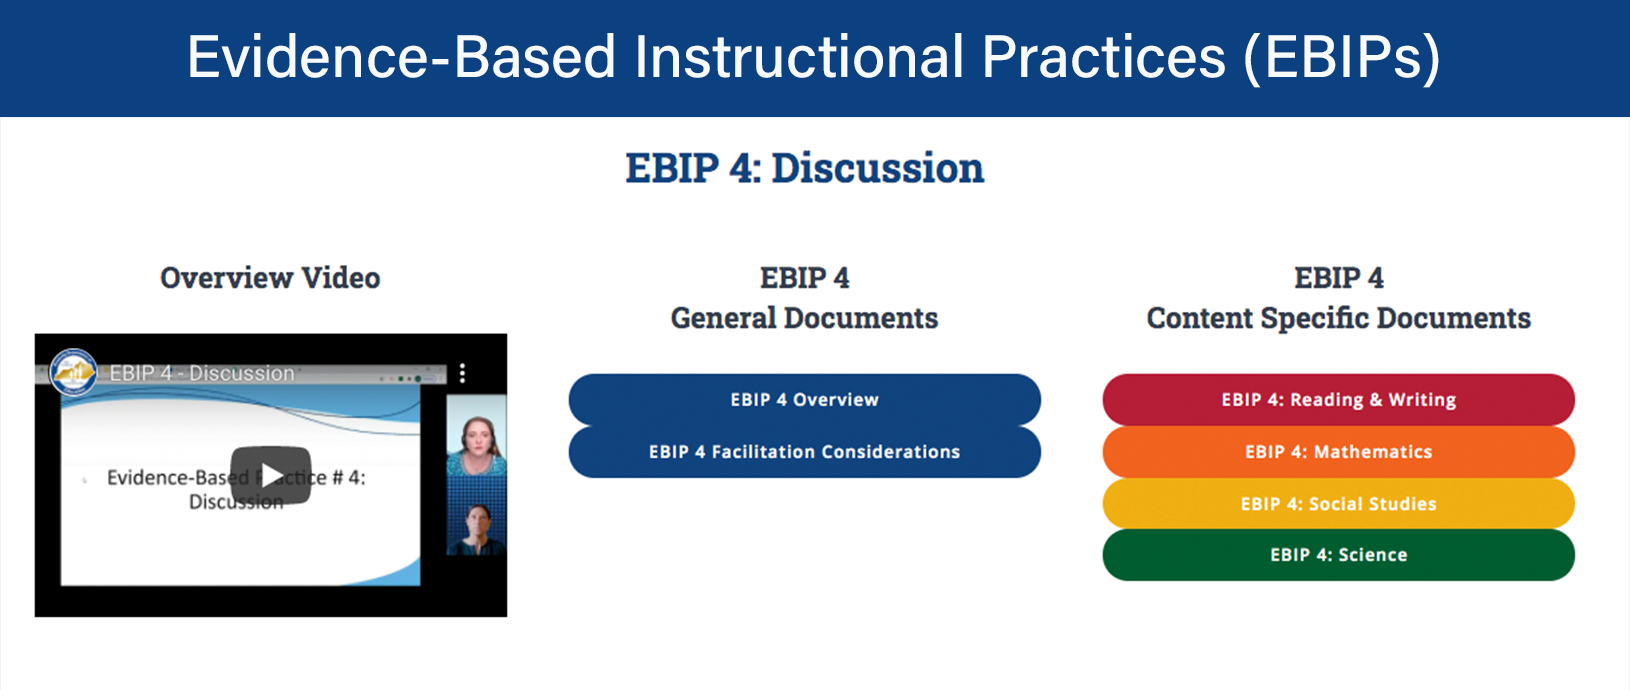 EBIP 4 Discussion